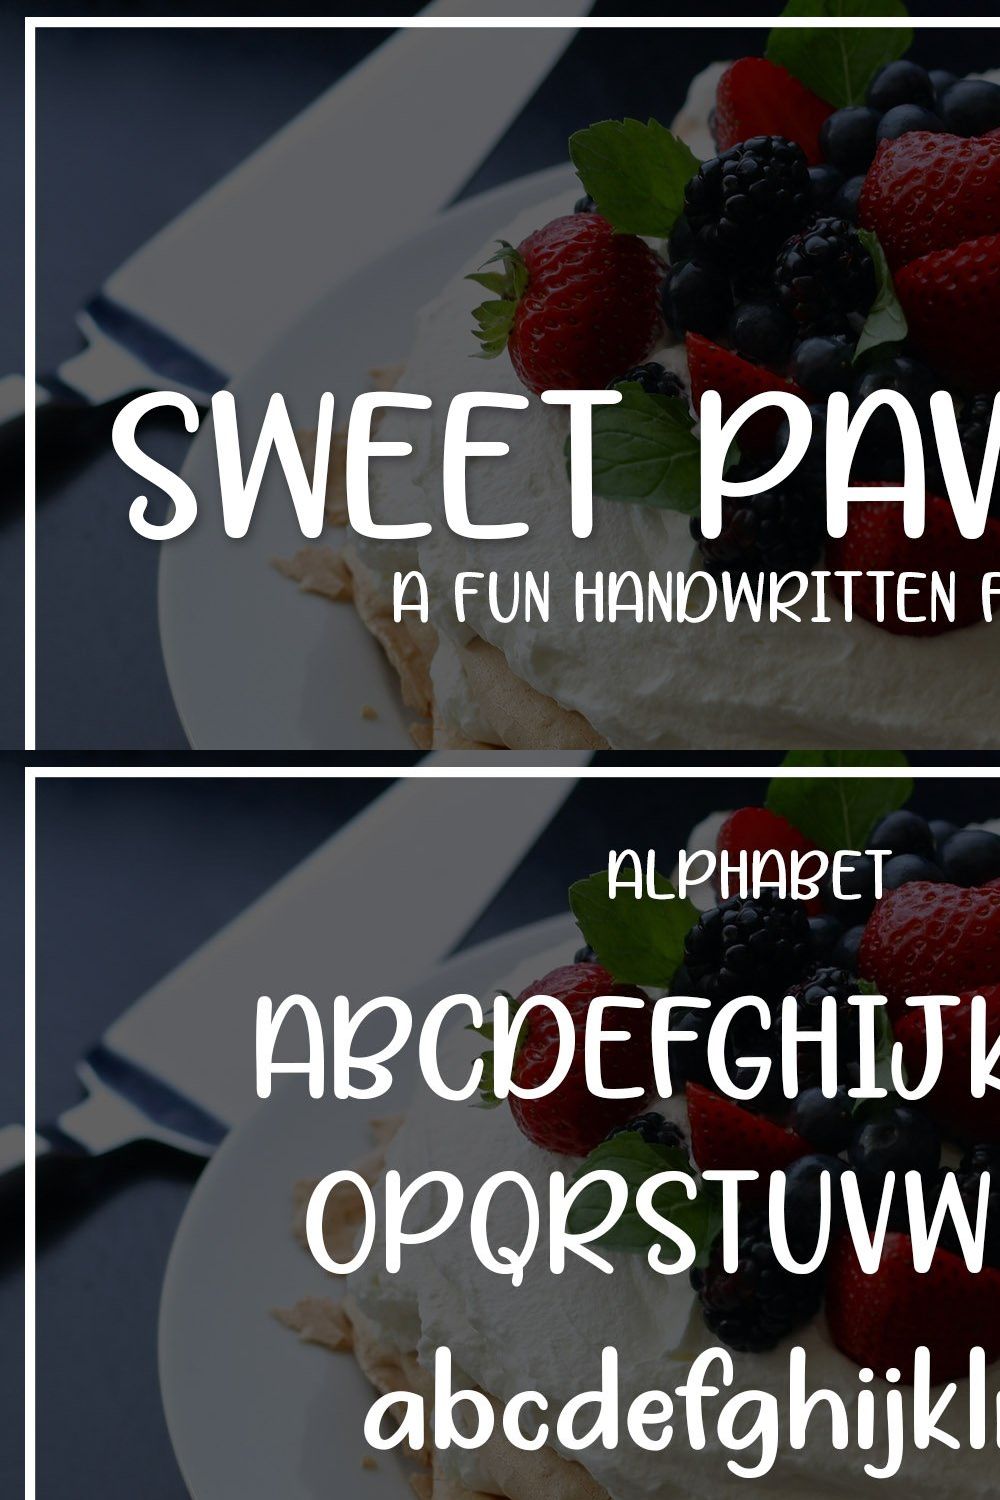 Sweet Pavlova pinterest preview image.